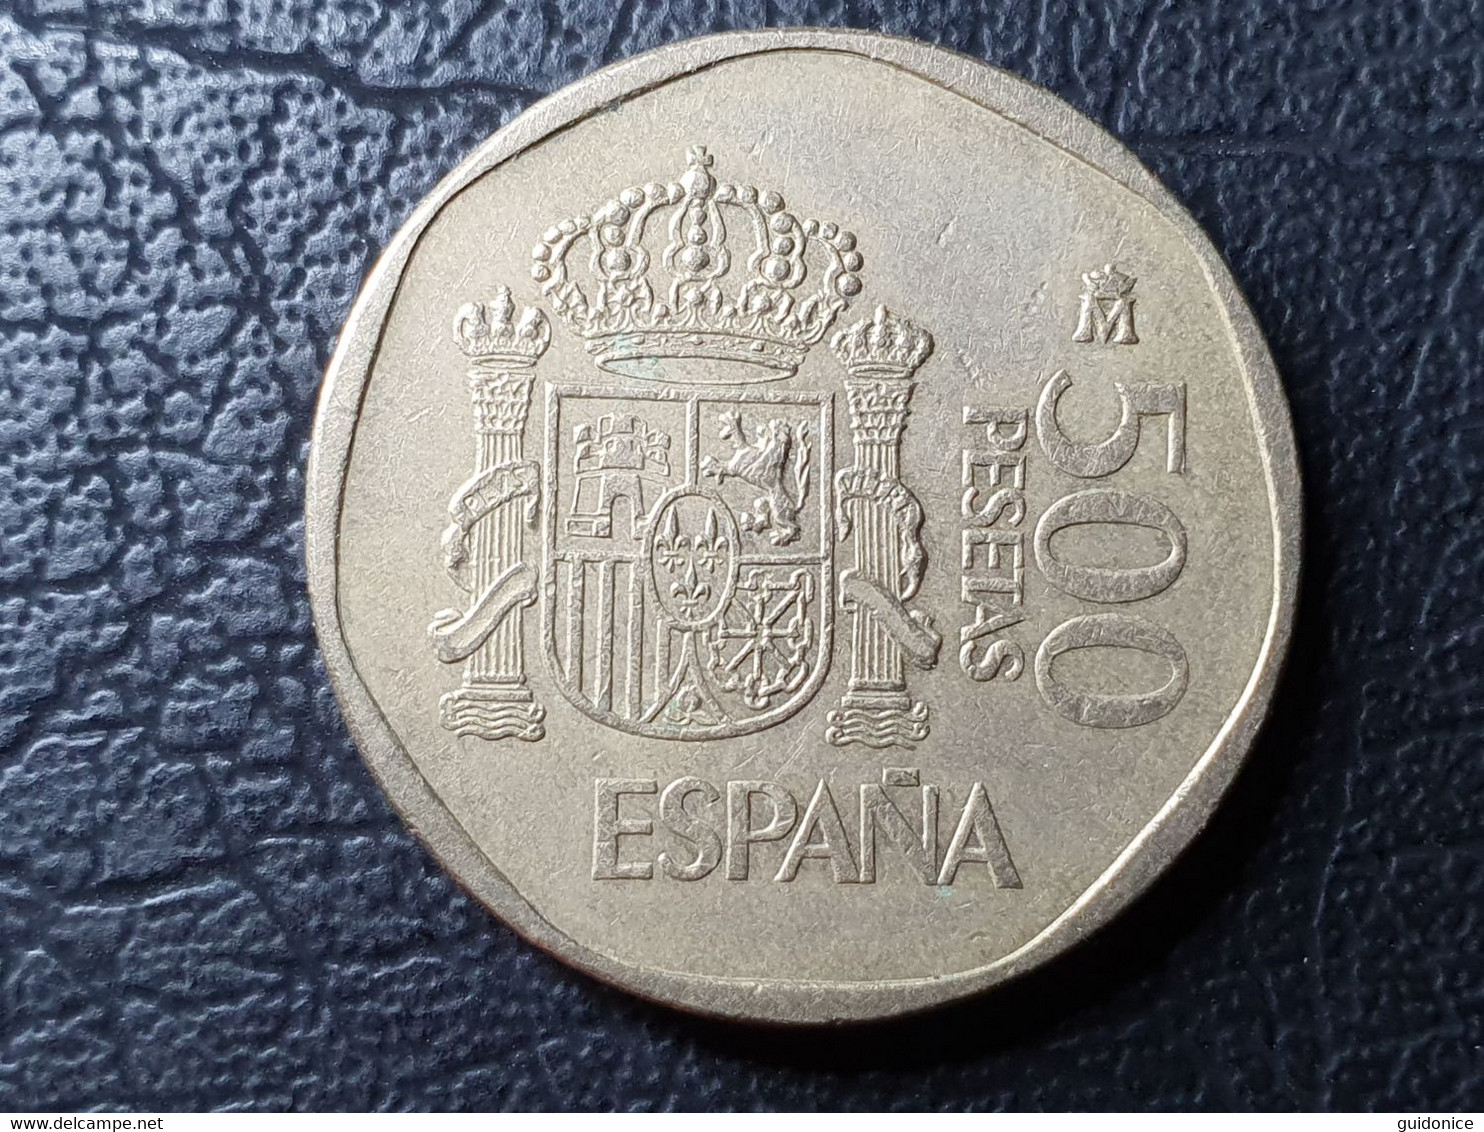 Münze - Spanien - 500 Pesetas Von 1989 - 500 Pesetas